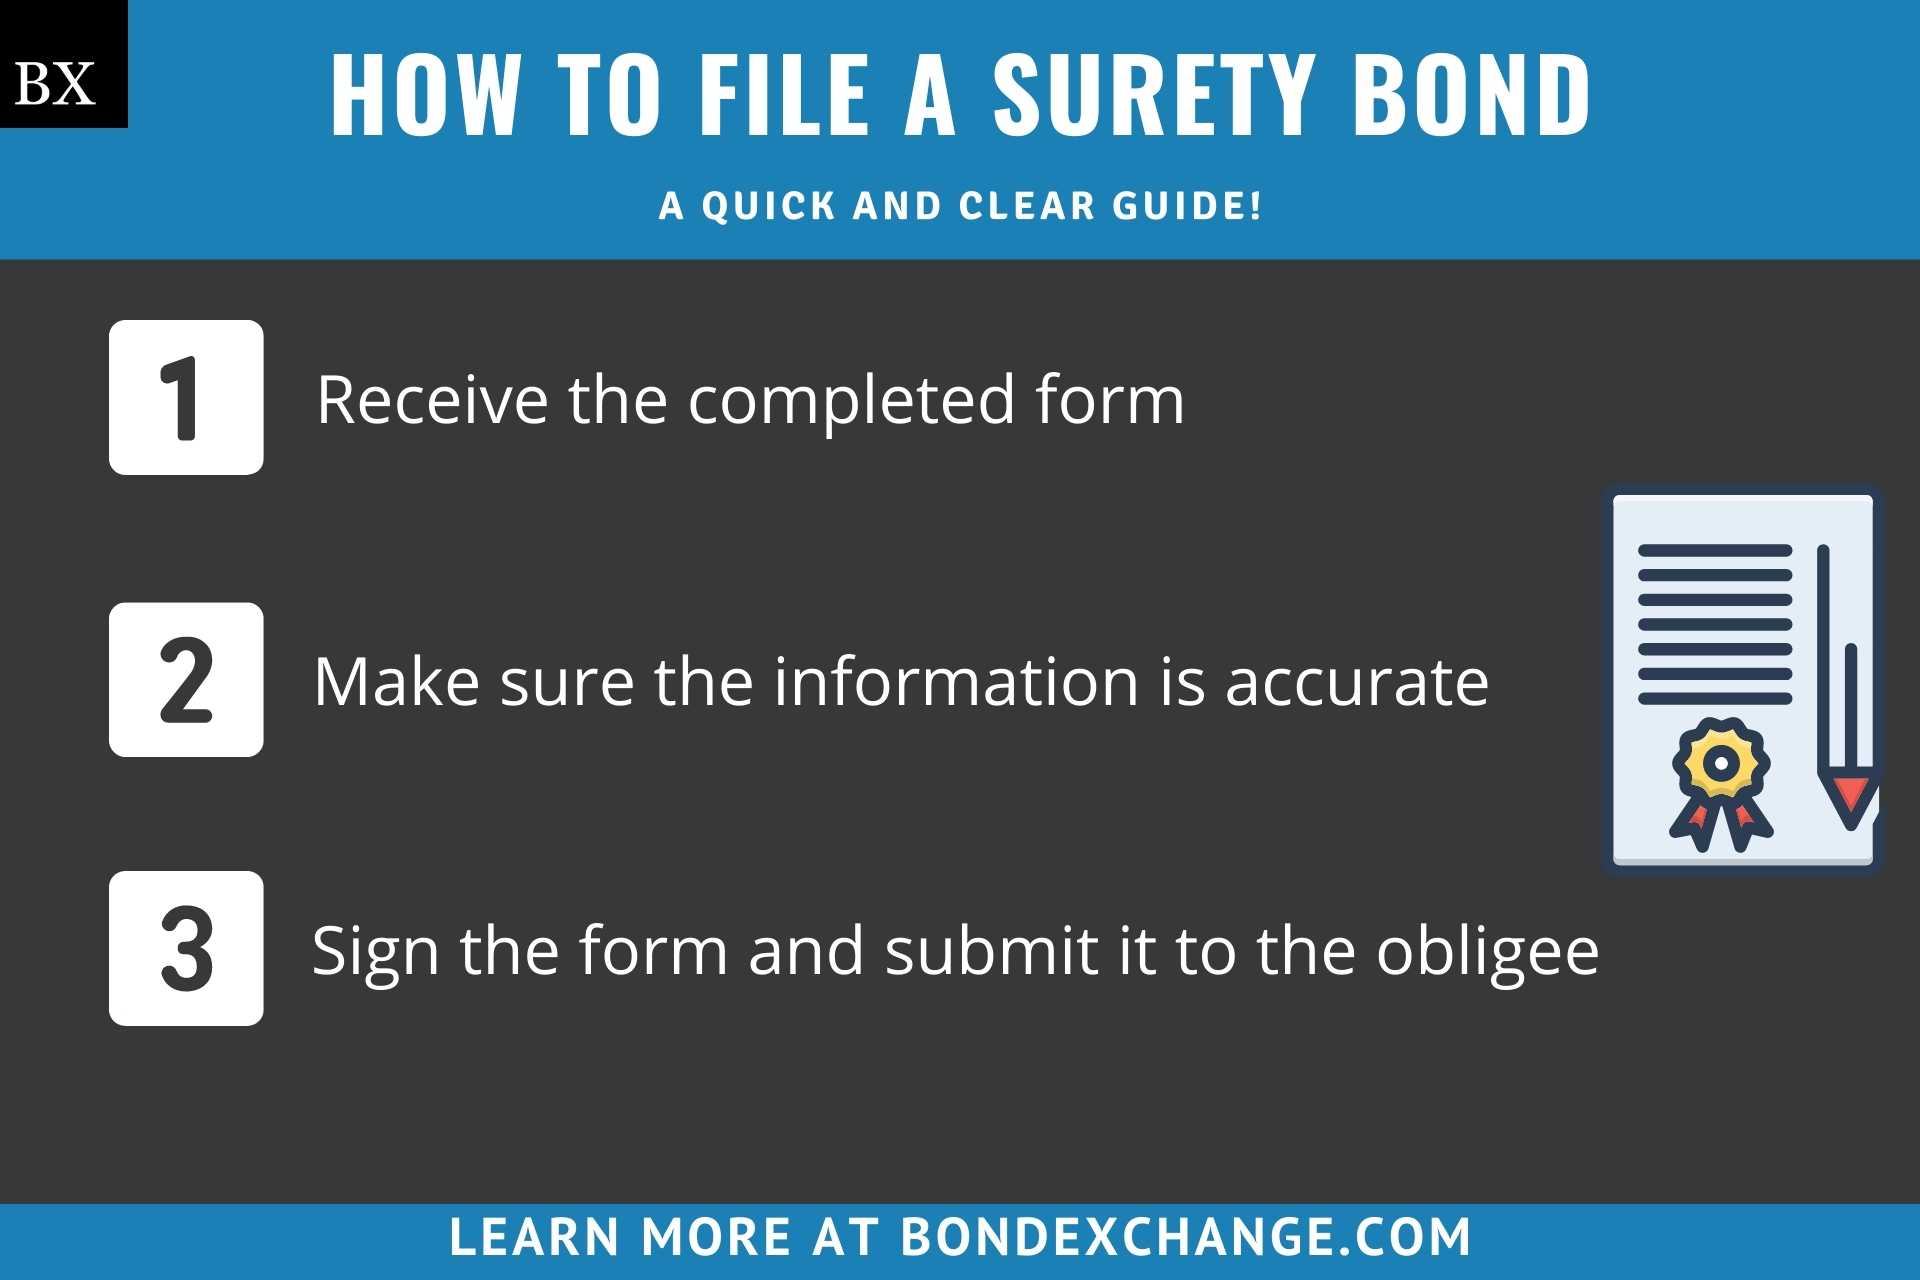 File a Surety Bond